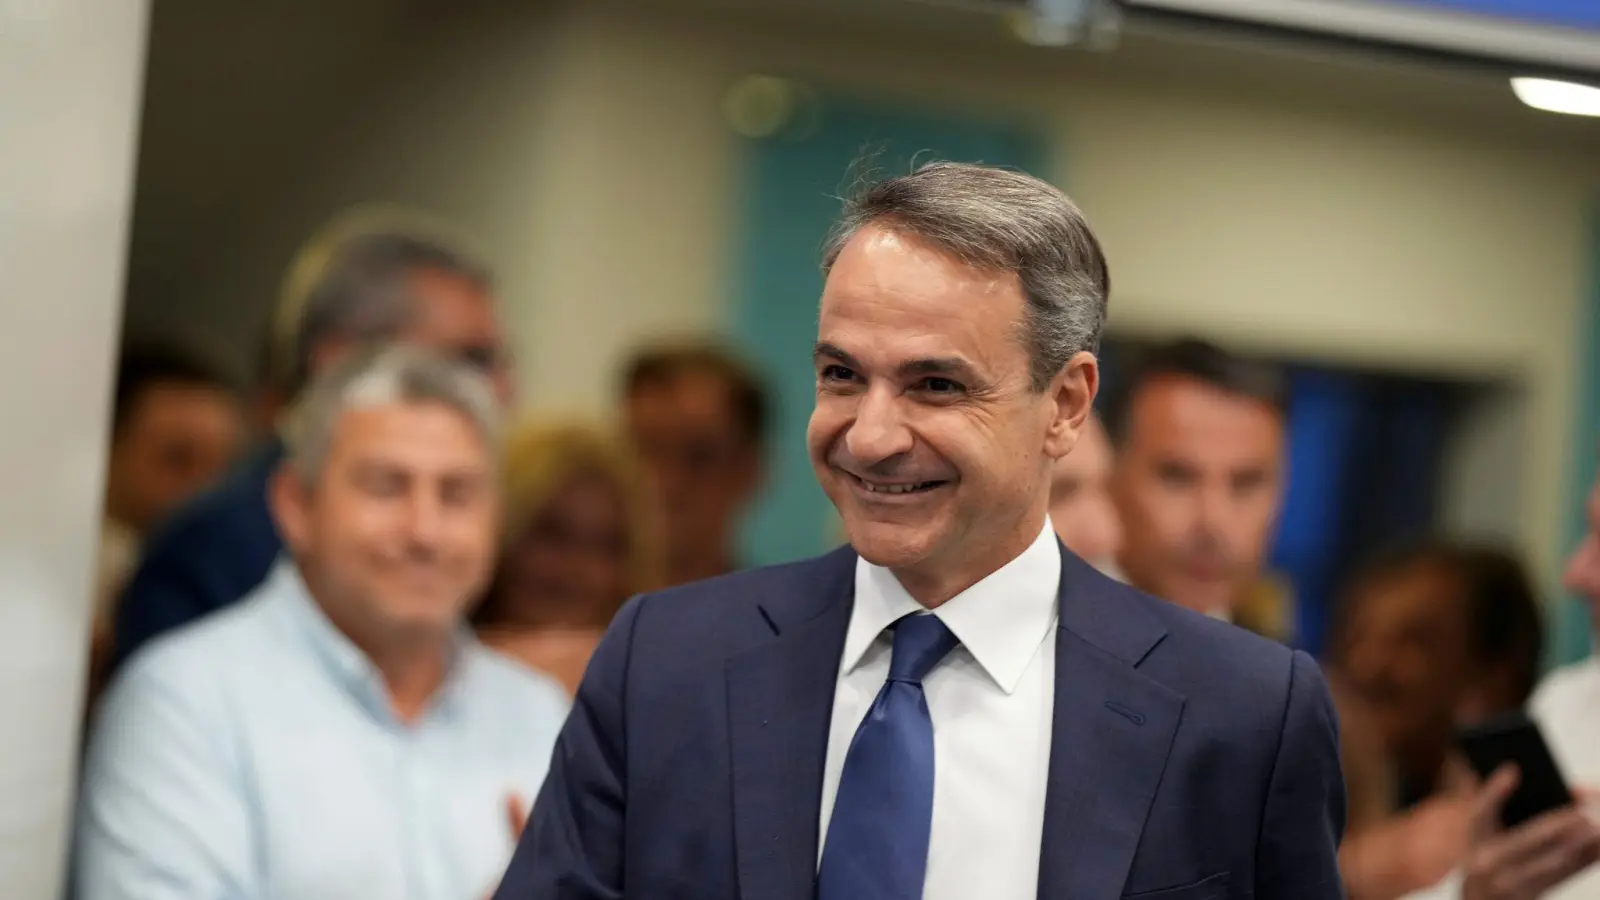 Kyriakos Mitsotakis ist Vorsitzender der konservativen Partei Nea Dimokratia. (Foto: Petros Giannakouris/AP)